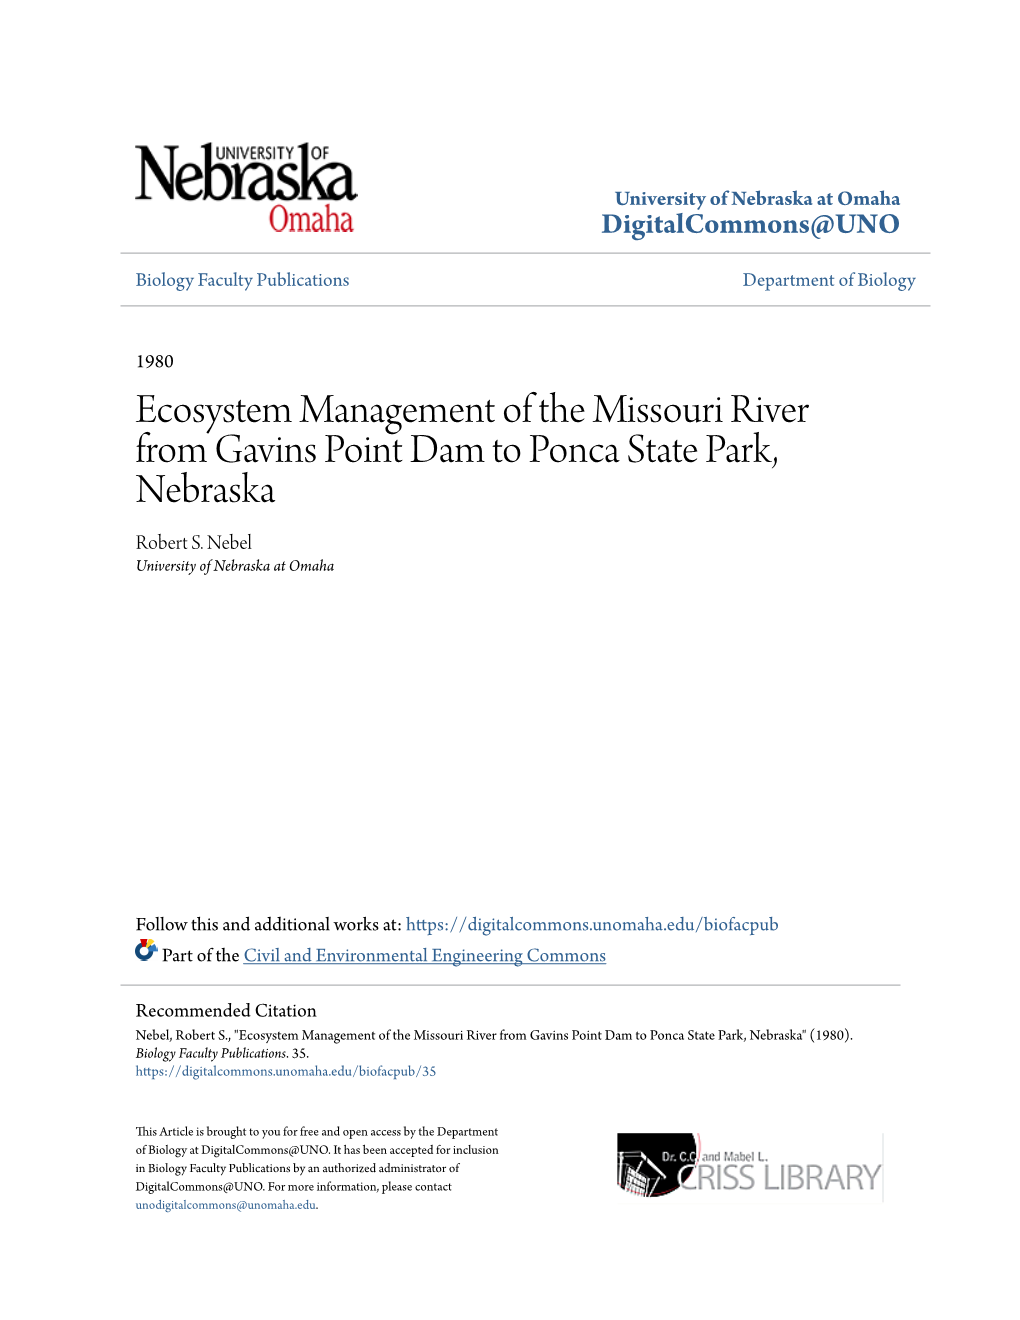 Ecosystem Management of the Missouri River from Gavins Point Dam to Ponca State Park, Nebraska Robert S